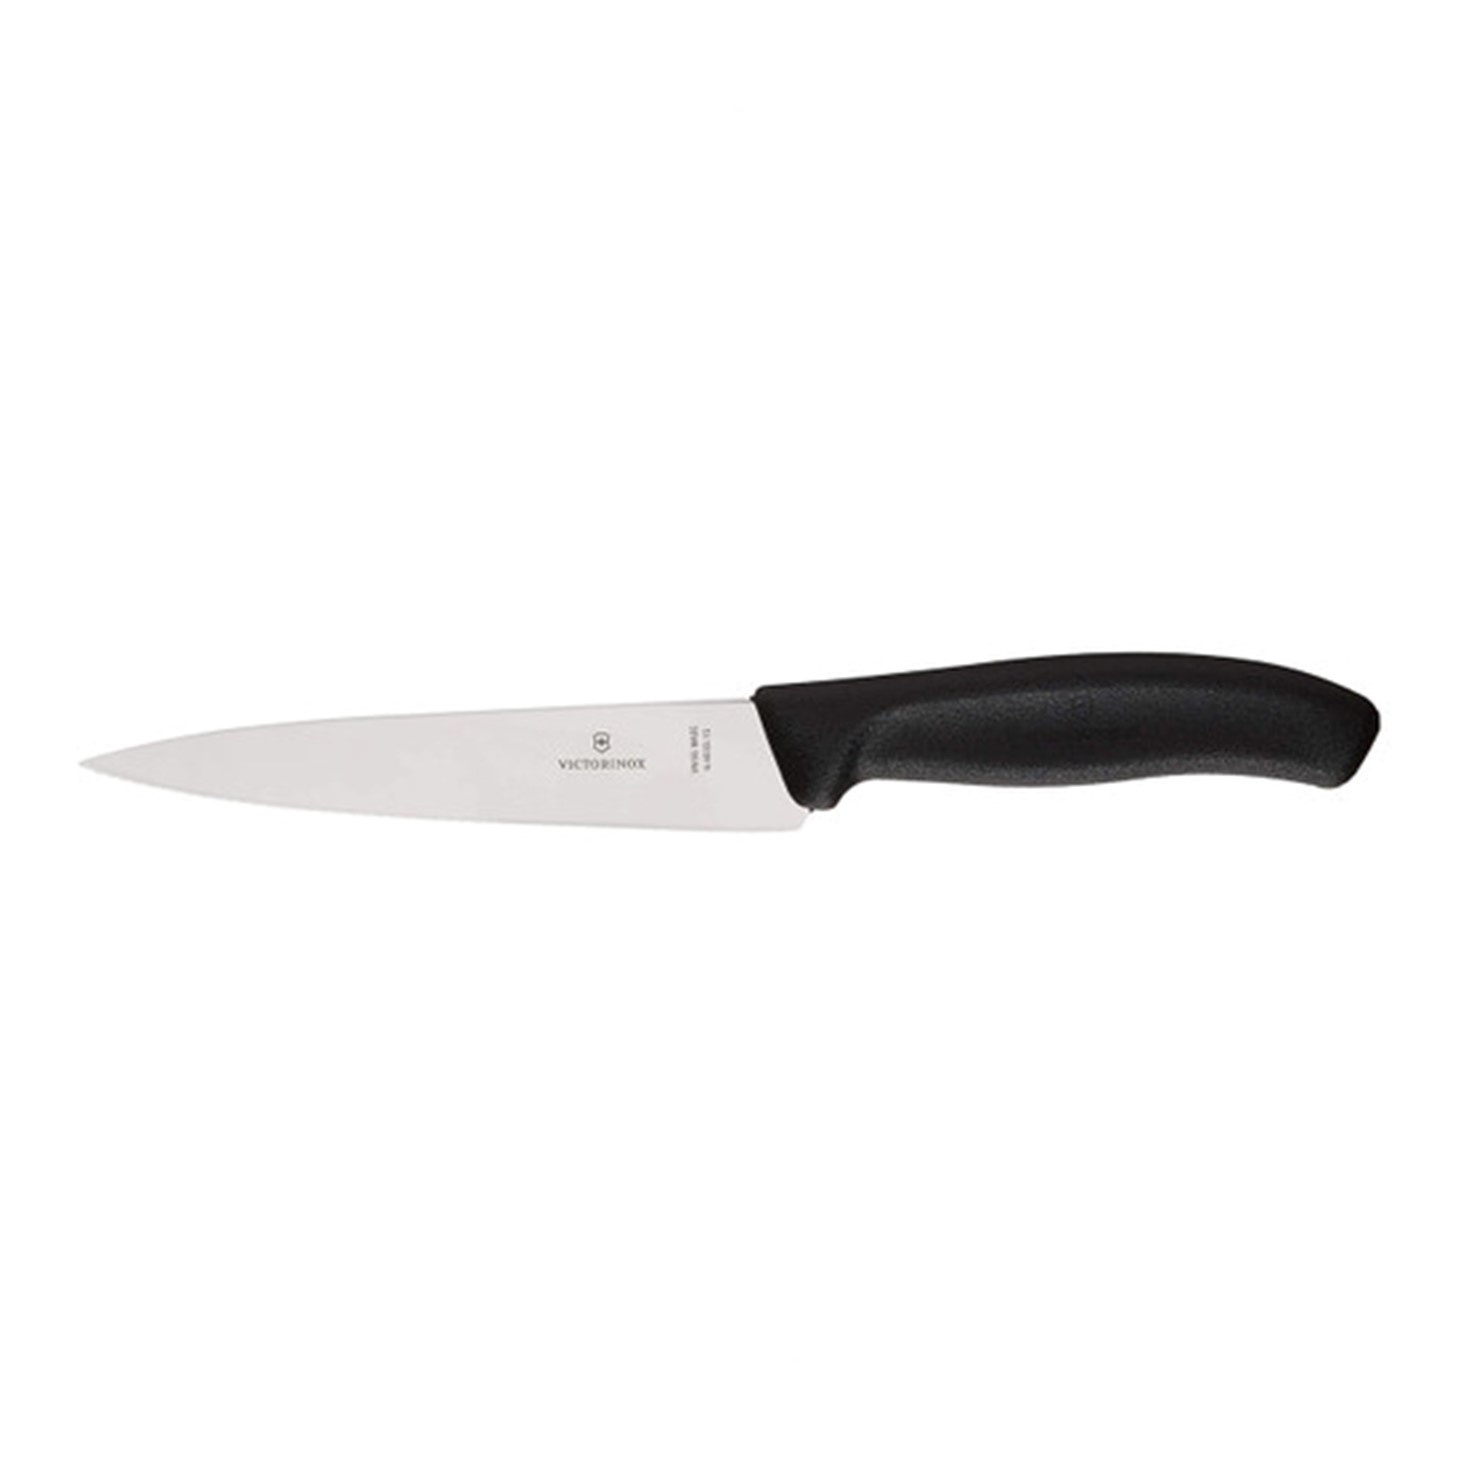 Victorinox Swiss Army Classic 6"  Serrated Chef Knife